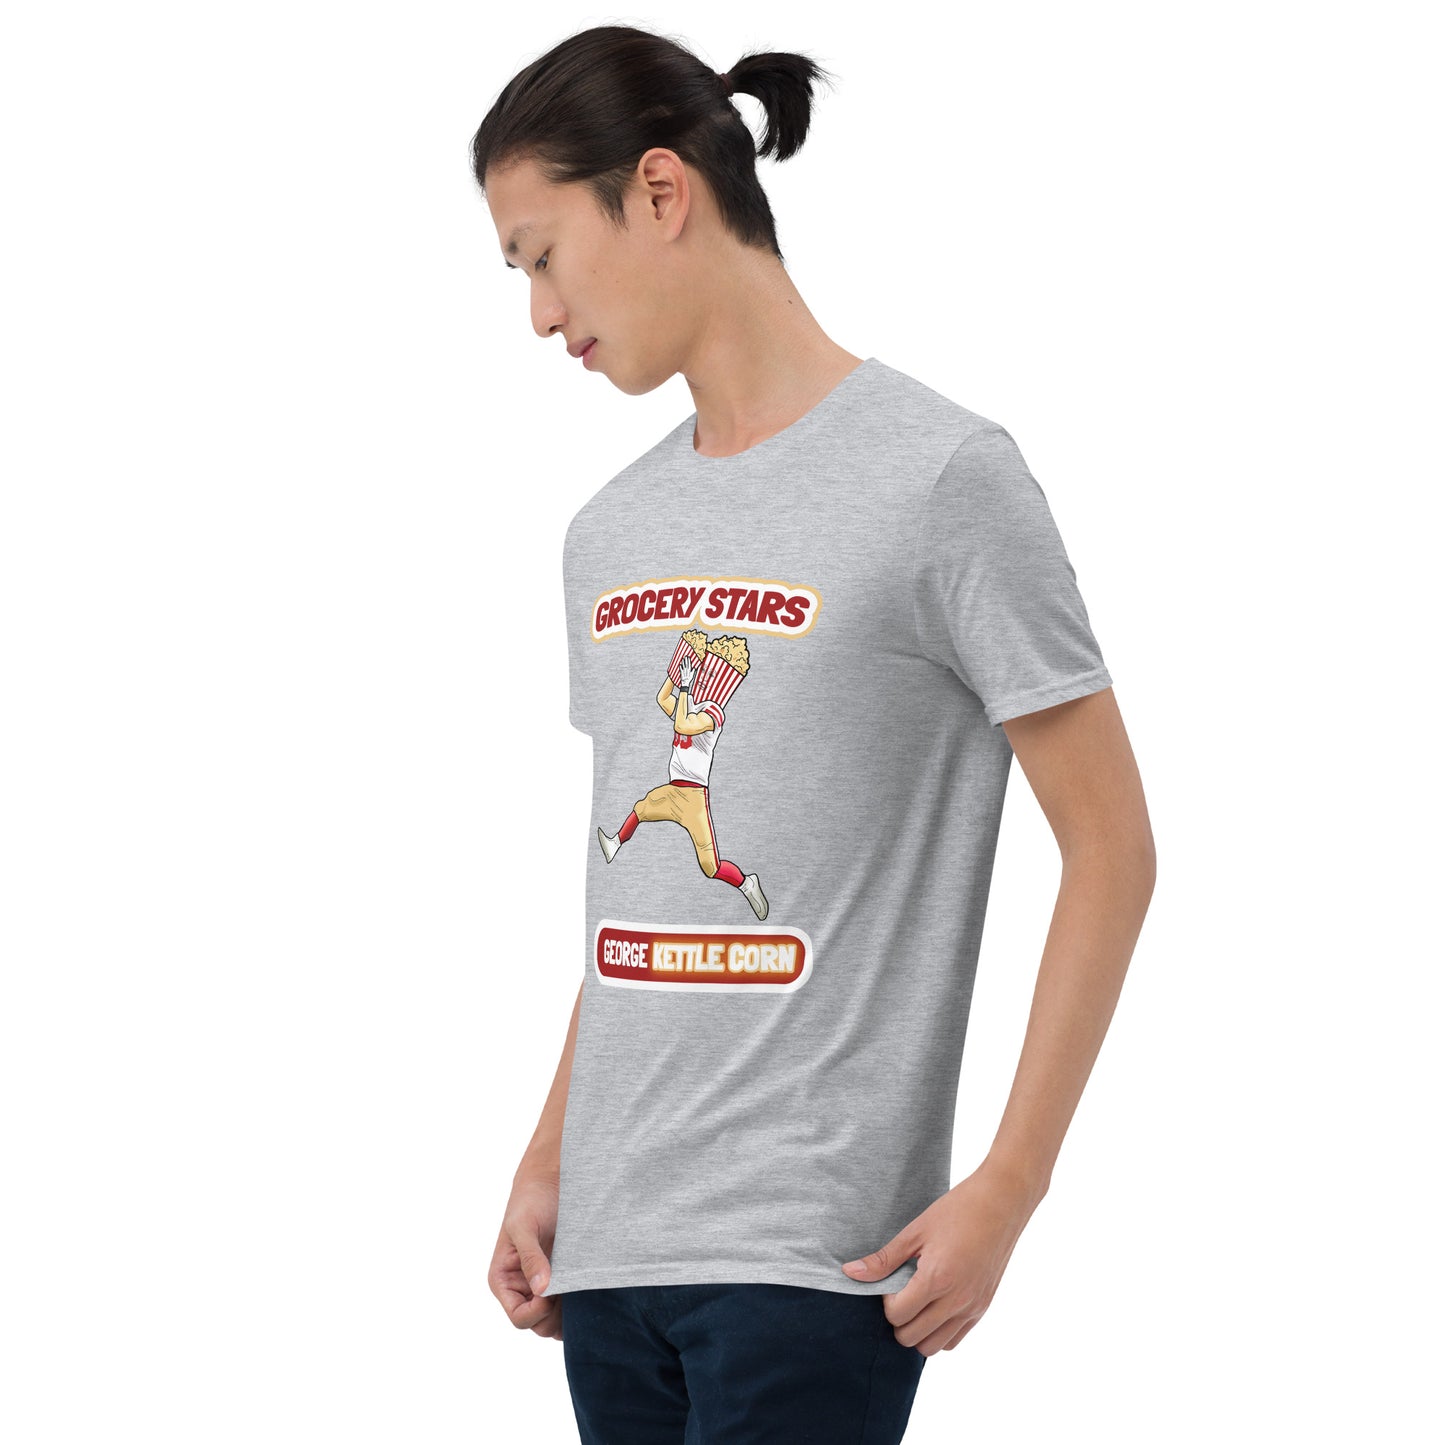 George Kettle Corn - Adult Short-Sleeve T-Shirt